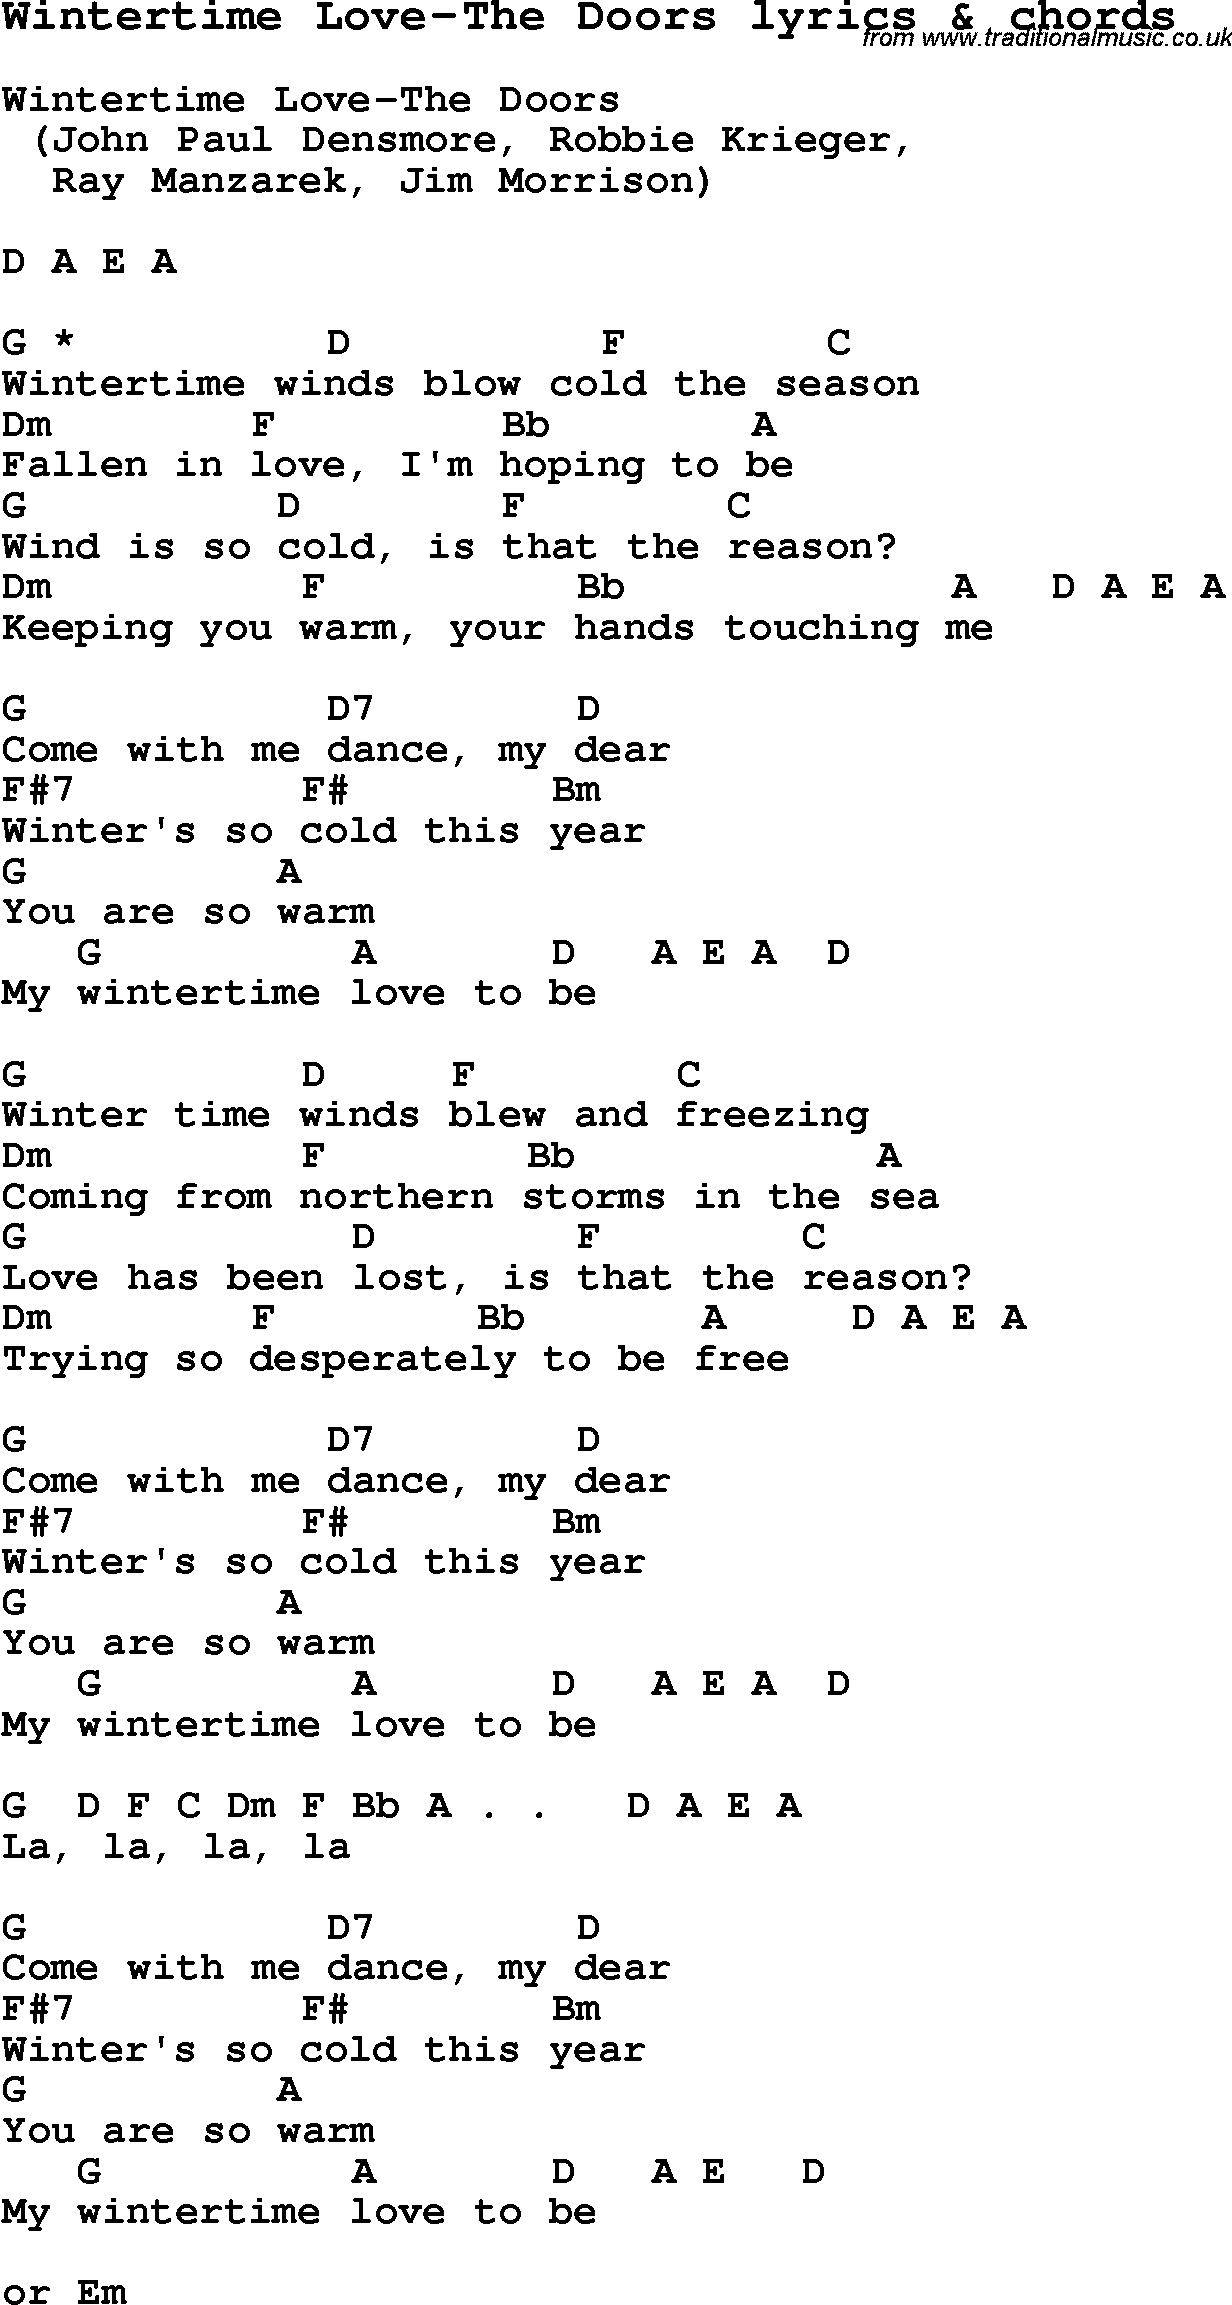 Love Song Lyrics for: Wintertime Love-The Doors with chords for Ukulele, Guitar Banjo etc.